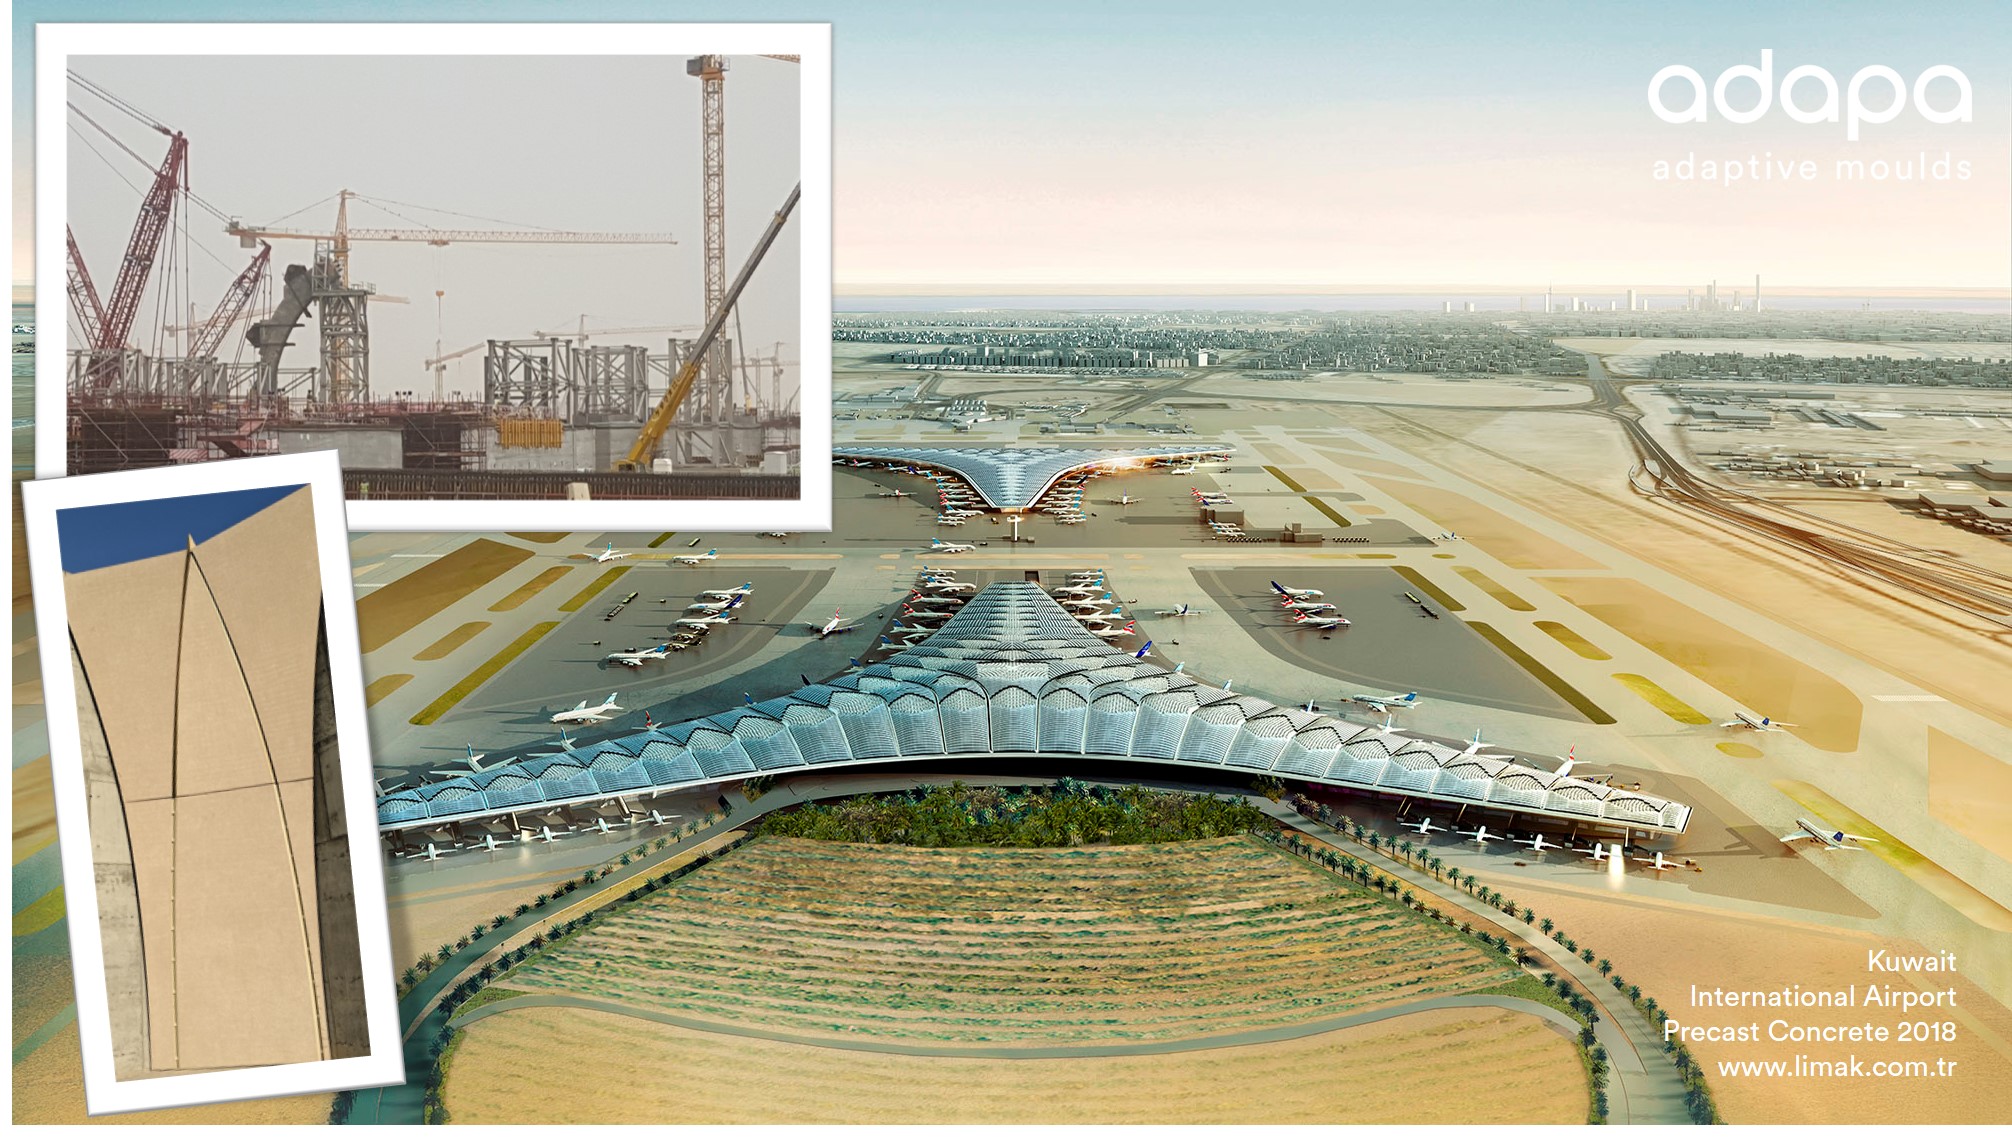 Kuwait International Airport Precast Concrete 2018